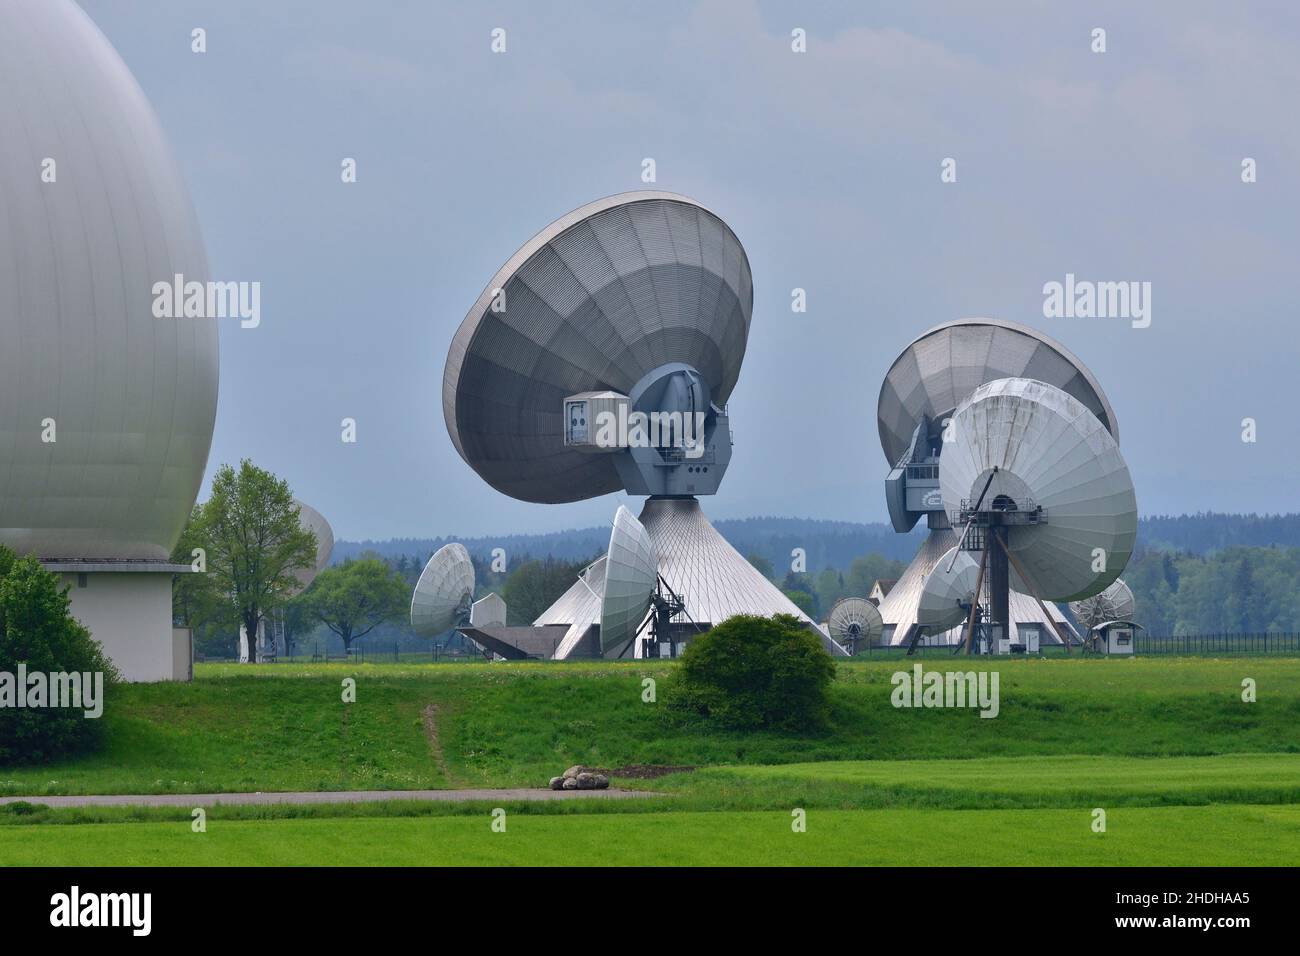 Radioteleskop, Radiosender, Forschungsstation, Radioteleskope, Radiosender, Ort der Forschung, Forschungsstationen Stockfoto